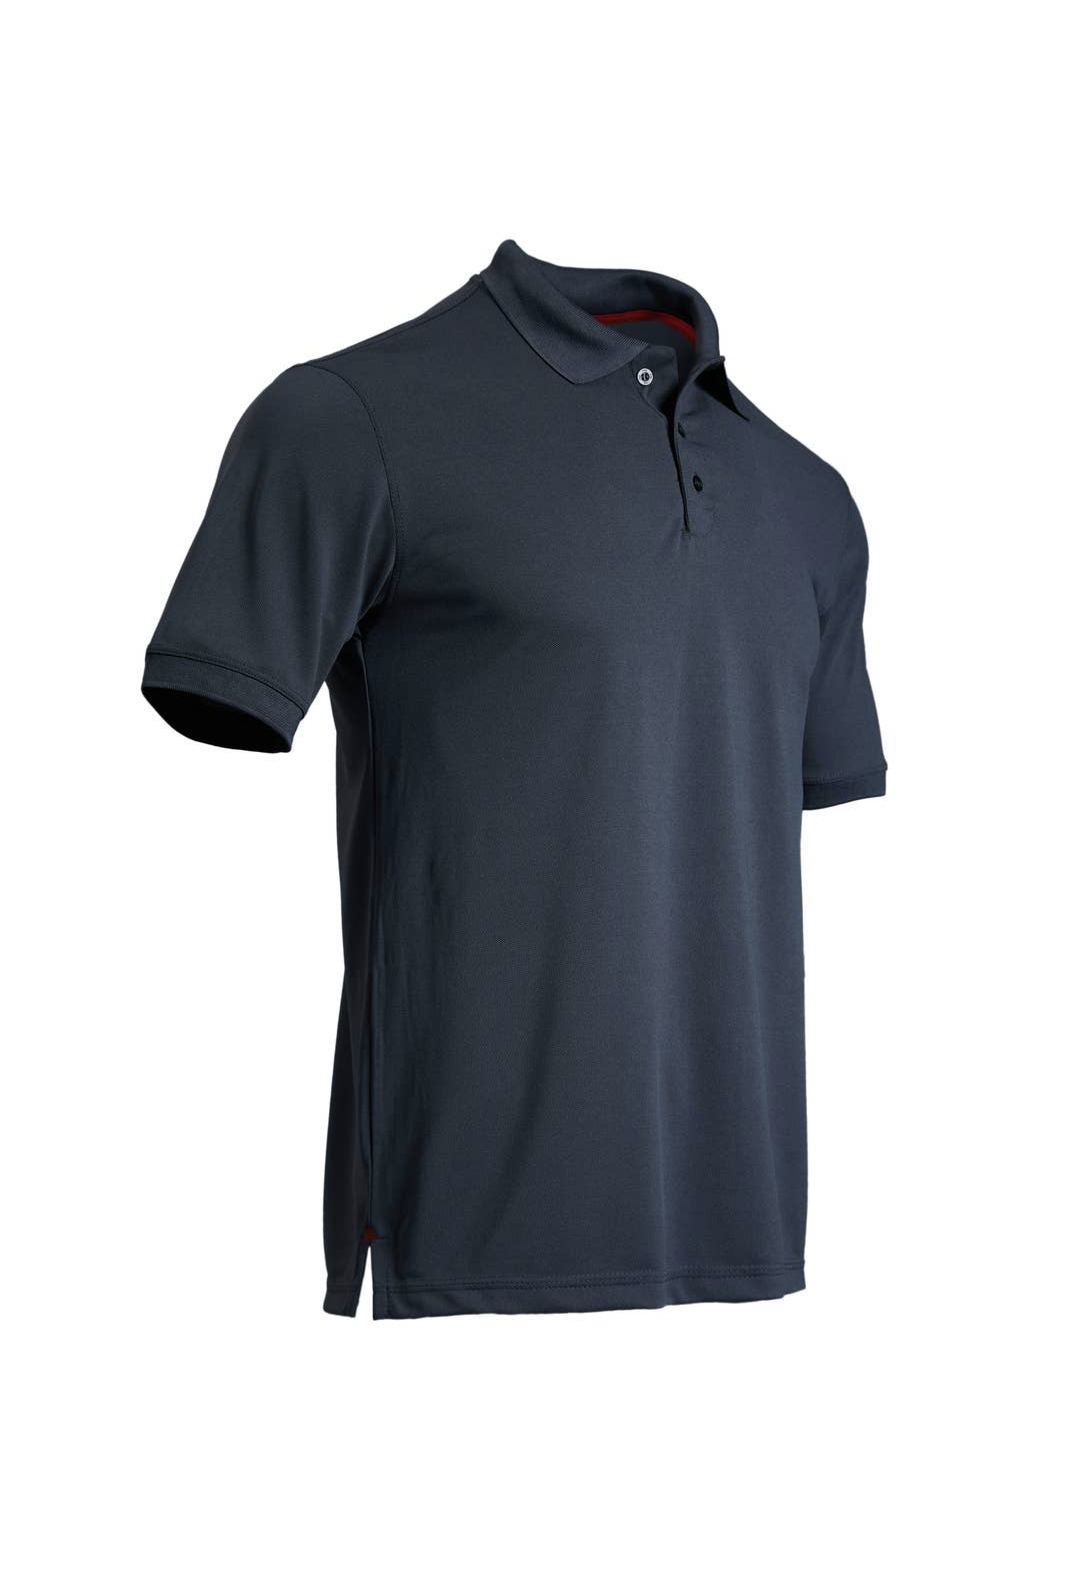 LeeHanTon Men's Solid Polo Shirt